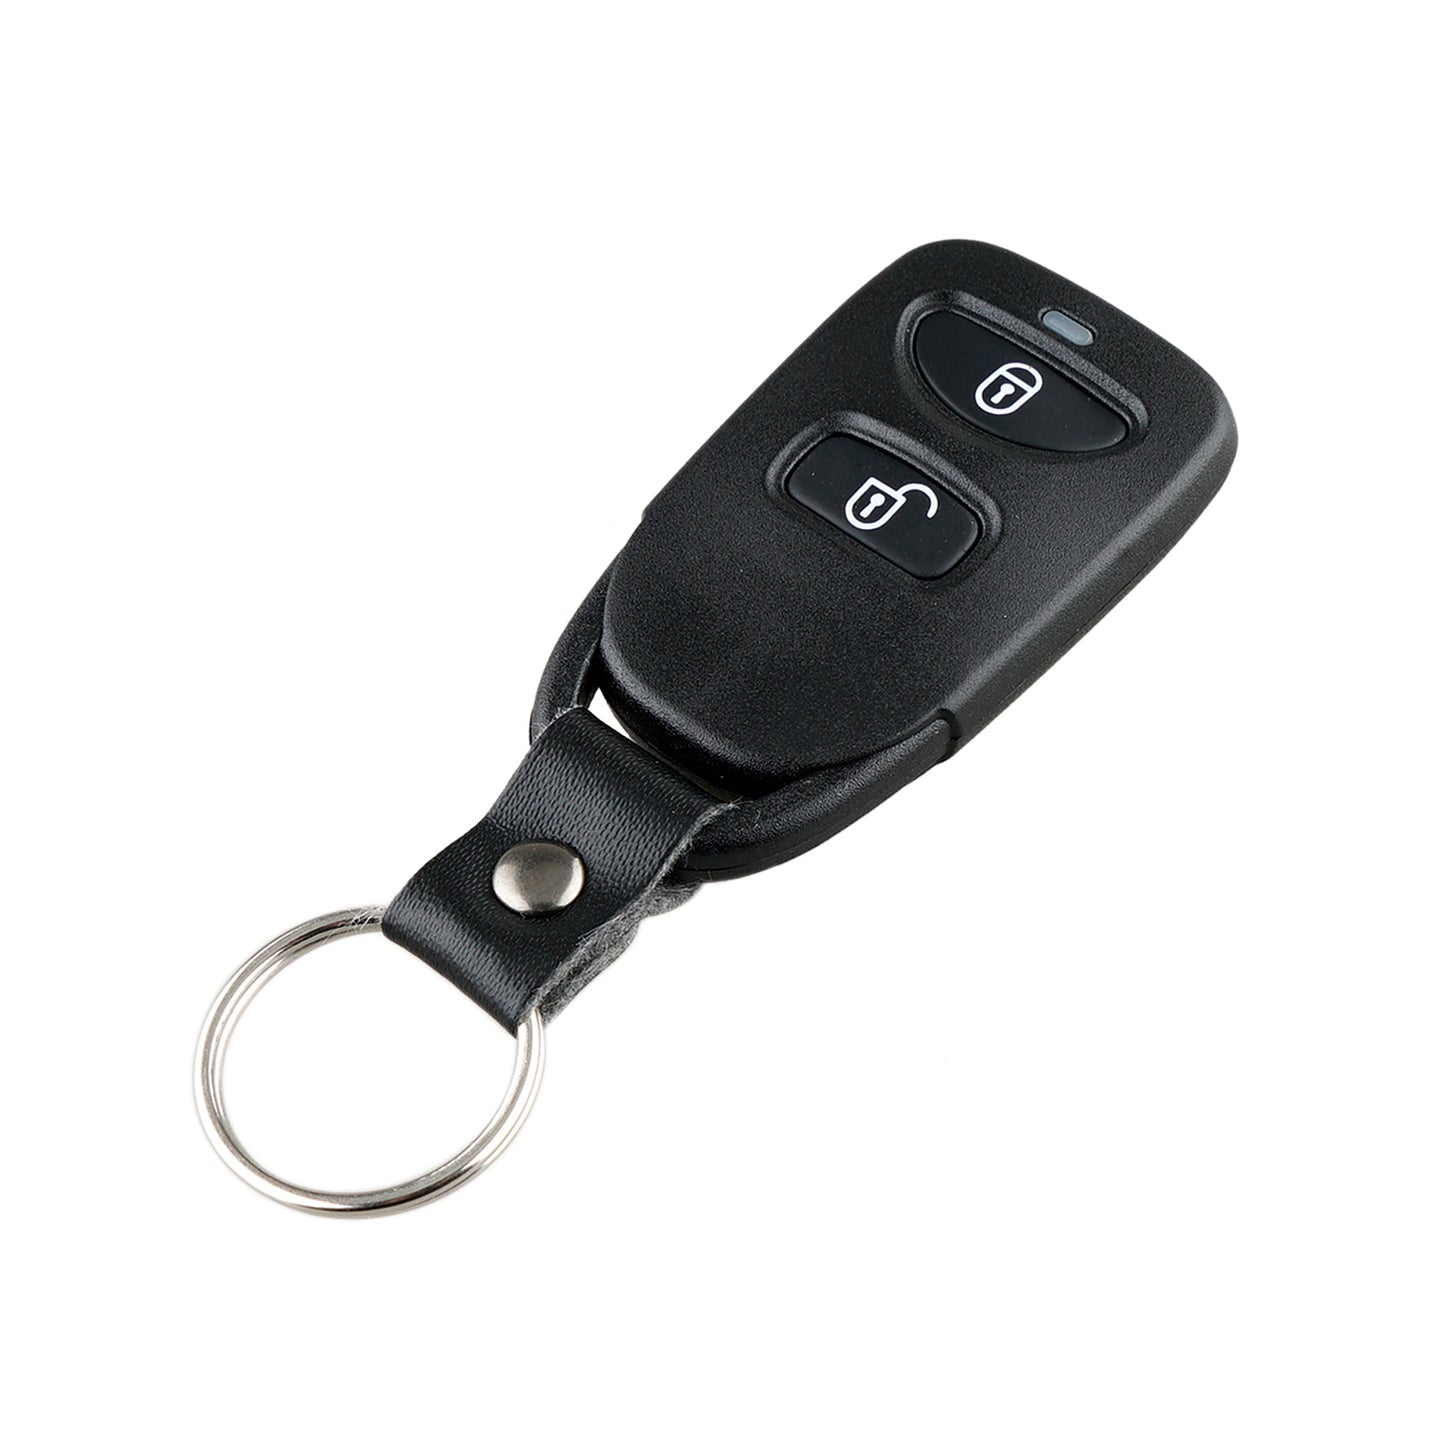 3 Buttons Keyless Entry Fob Remote Car Key For 2007 - 2012 Hyundai Santa Fe Accent FCC ID:PINHA-T038 SKU : J907